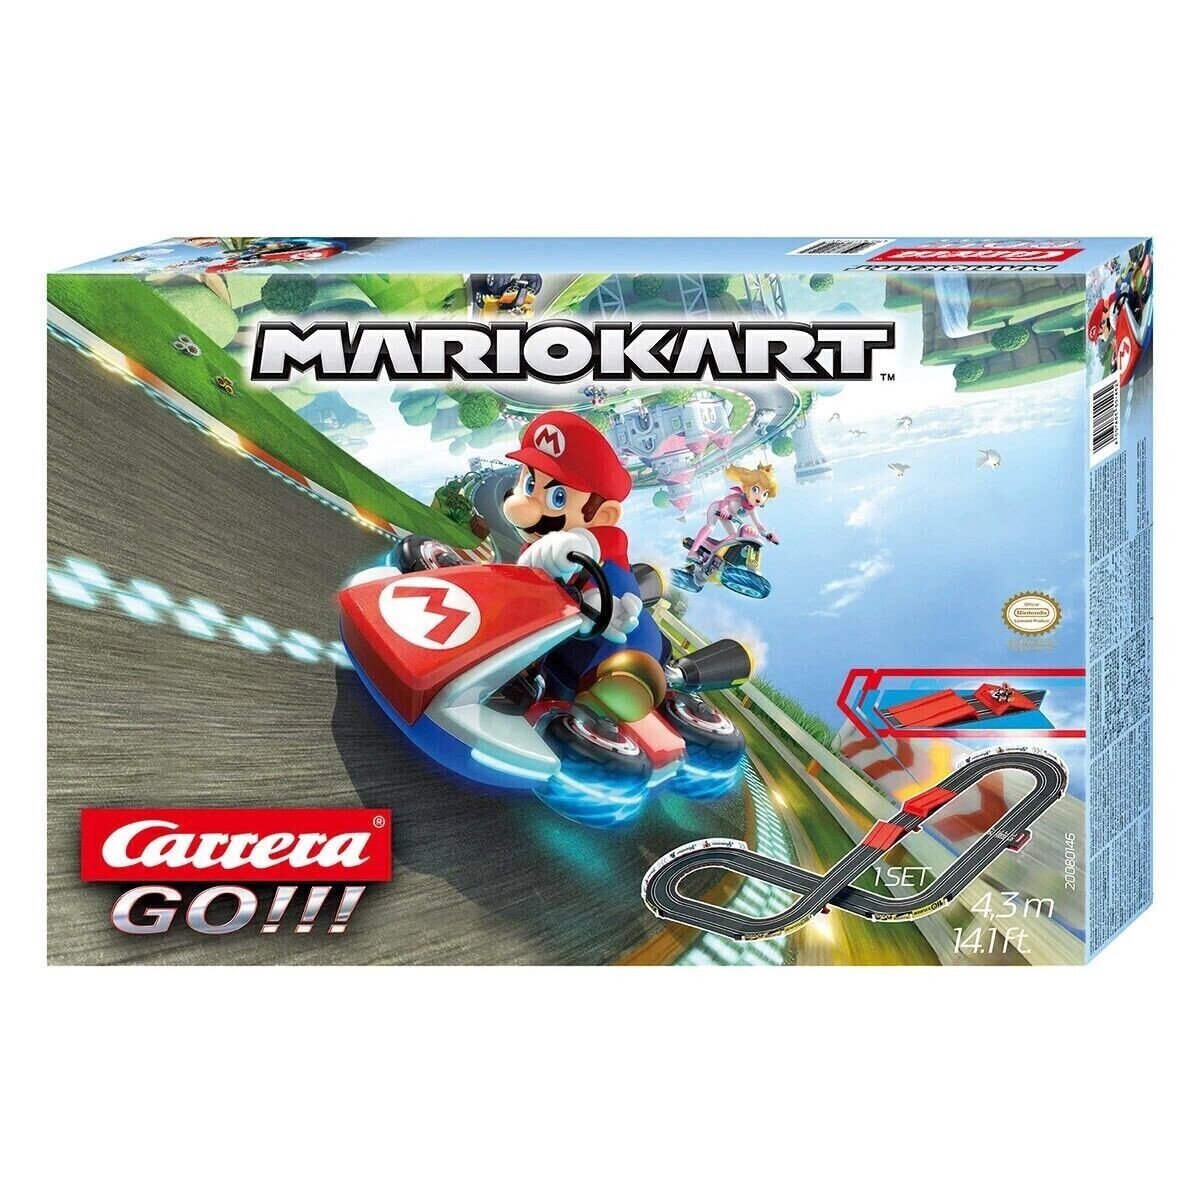 Nintendo Mario Kart Carrera Go!!! Racetrack with 2 Cars Slot Car Racing Luigi